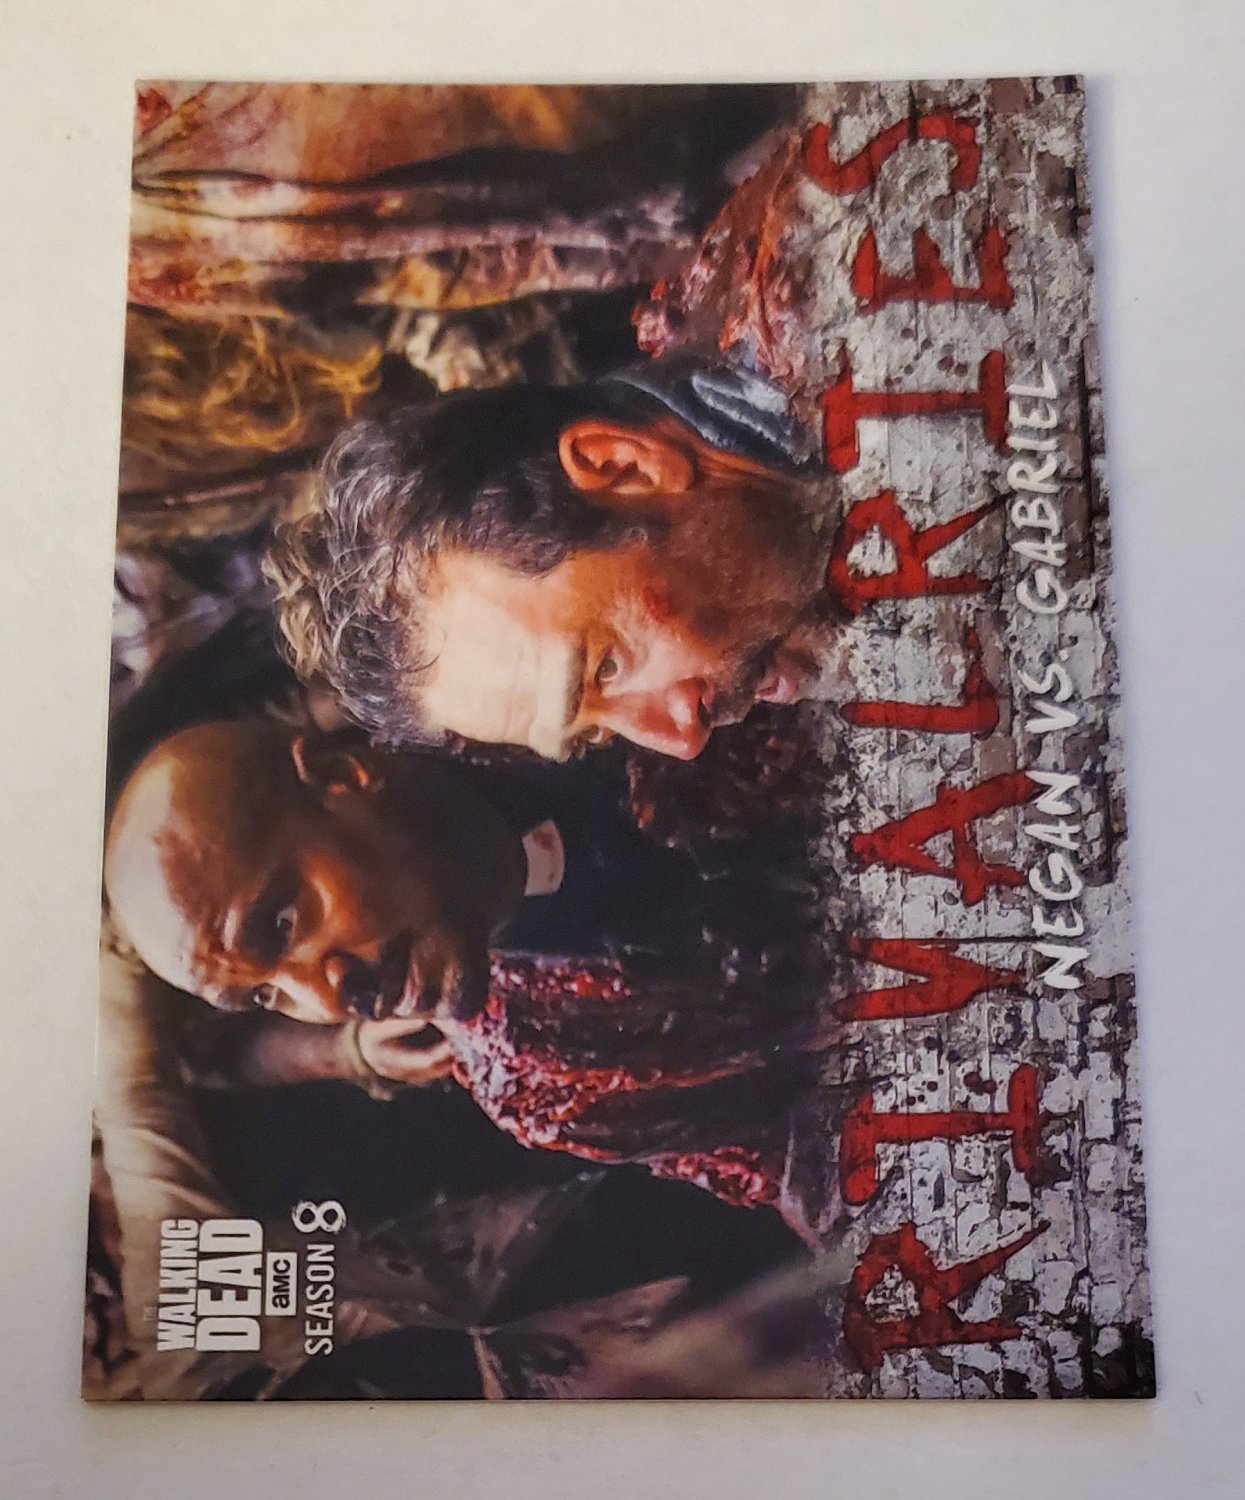 Negan & Gabriel 2018 The Walking Dead Season 8 Part 1 Rivalries Insert Card